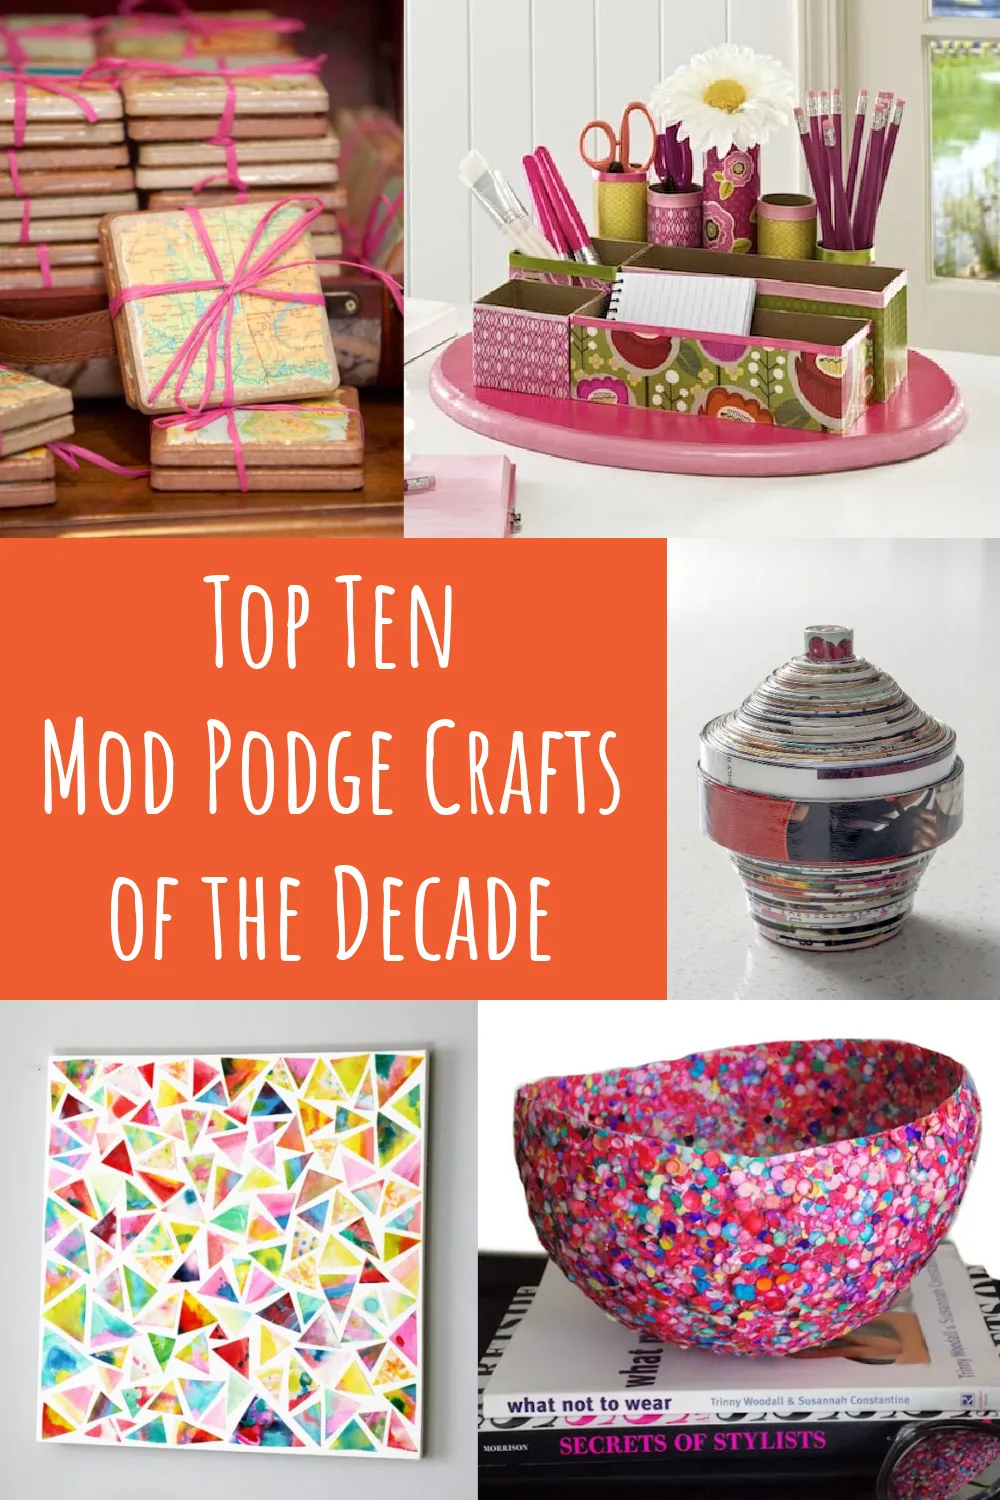 Top 10 Mod Podge Crafts of the Decade - Mod Podge Rocks